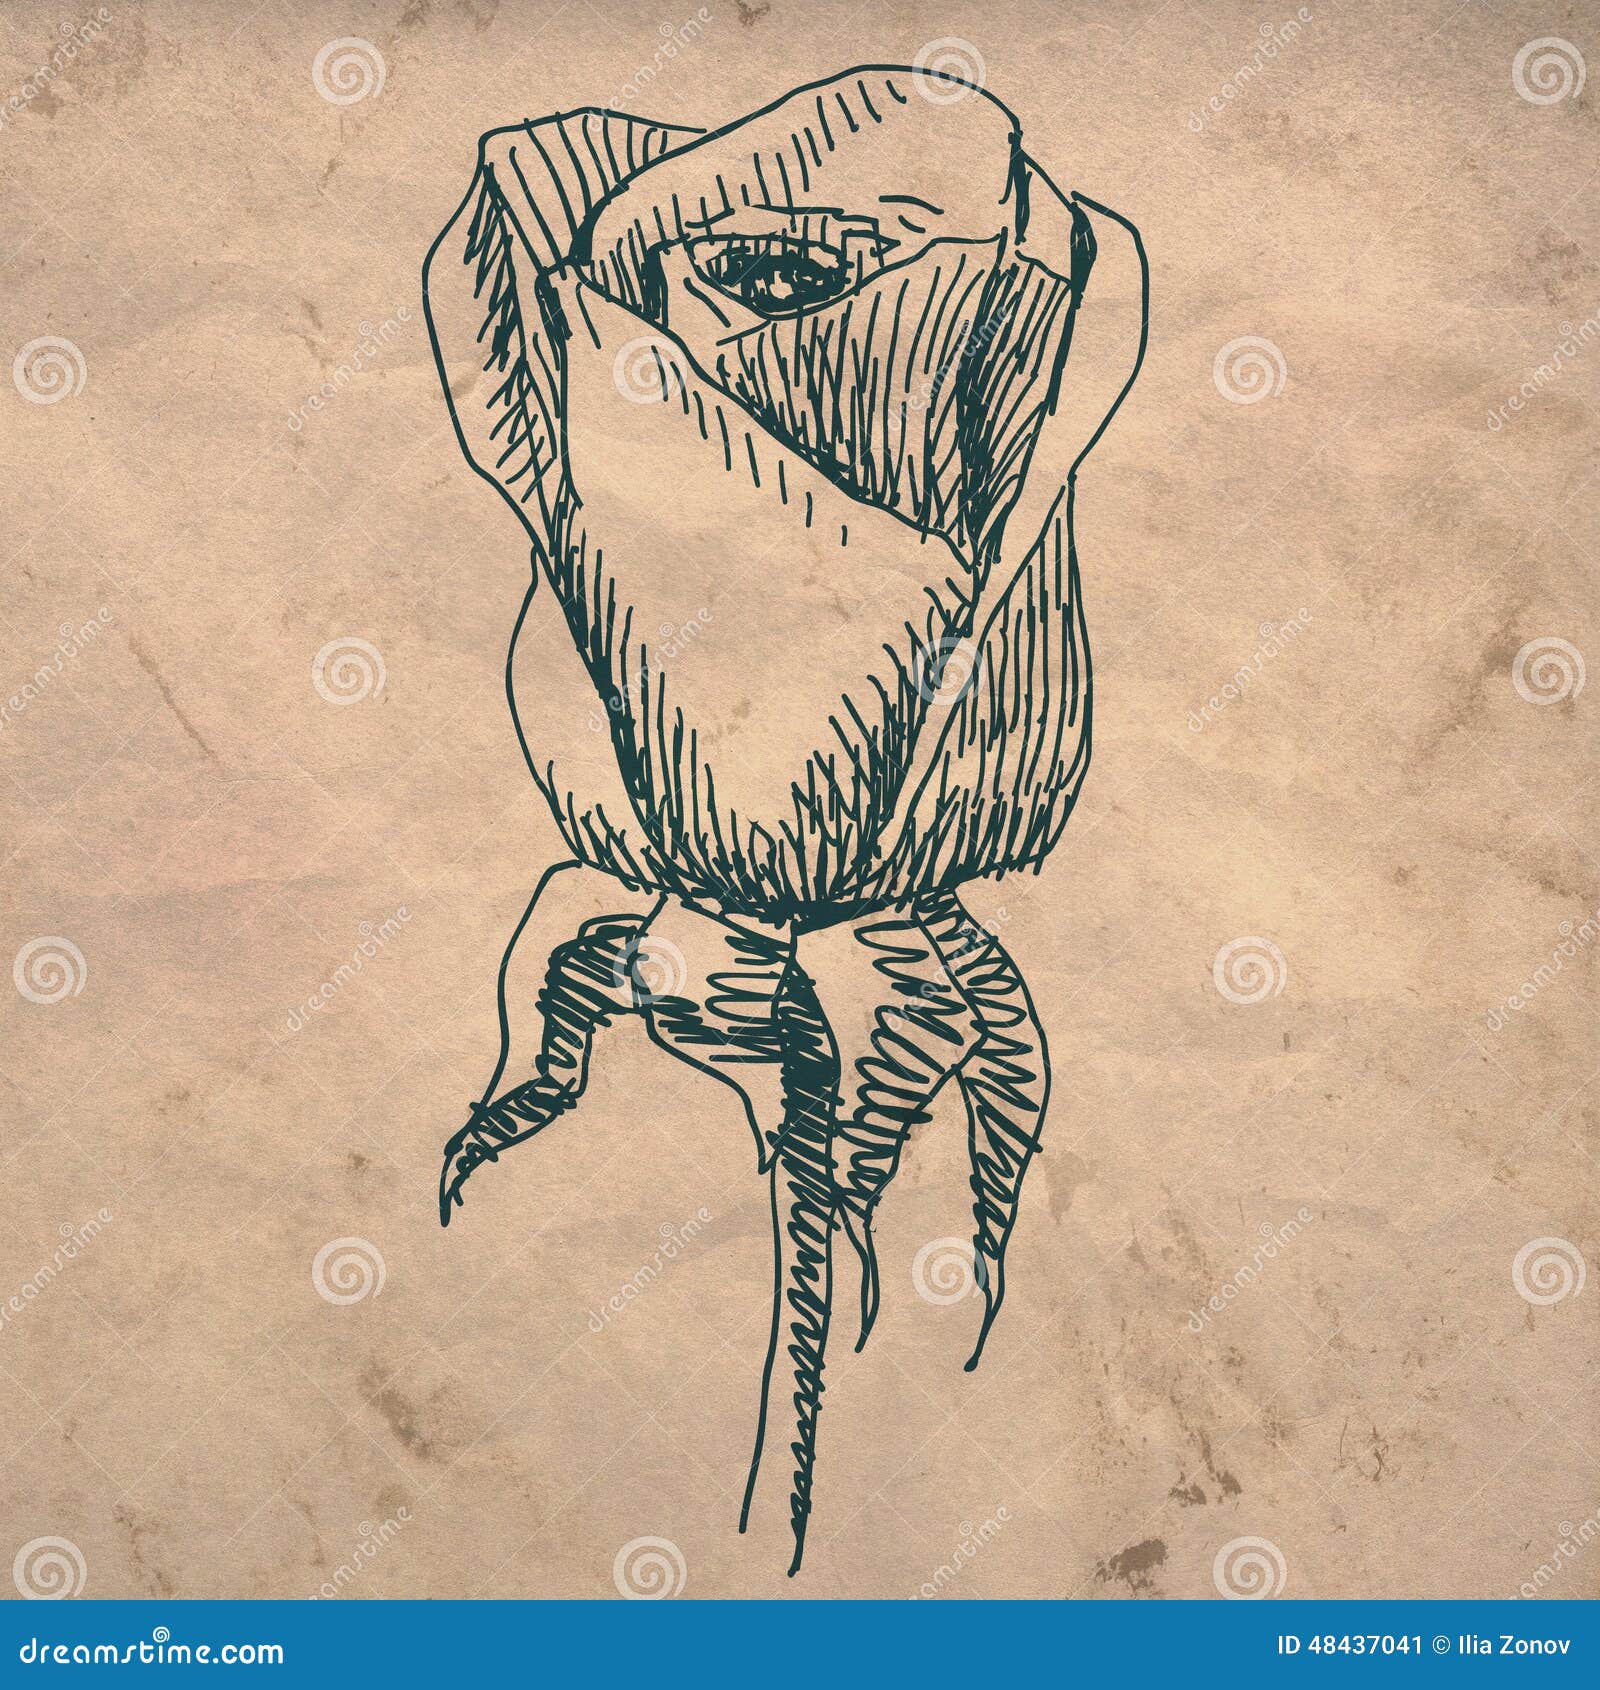 Rose flower drawing stock illustration. Illustration of hand ...